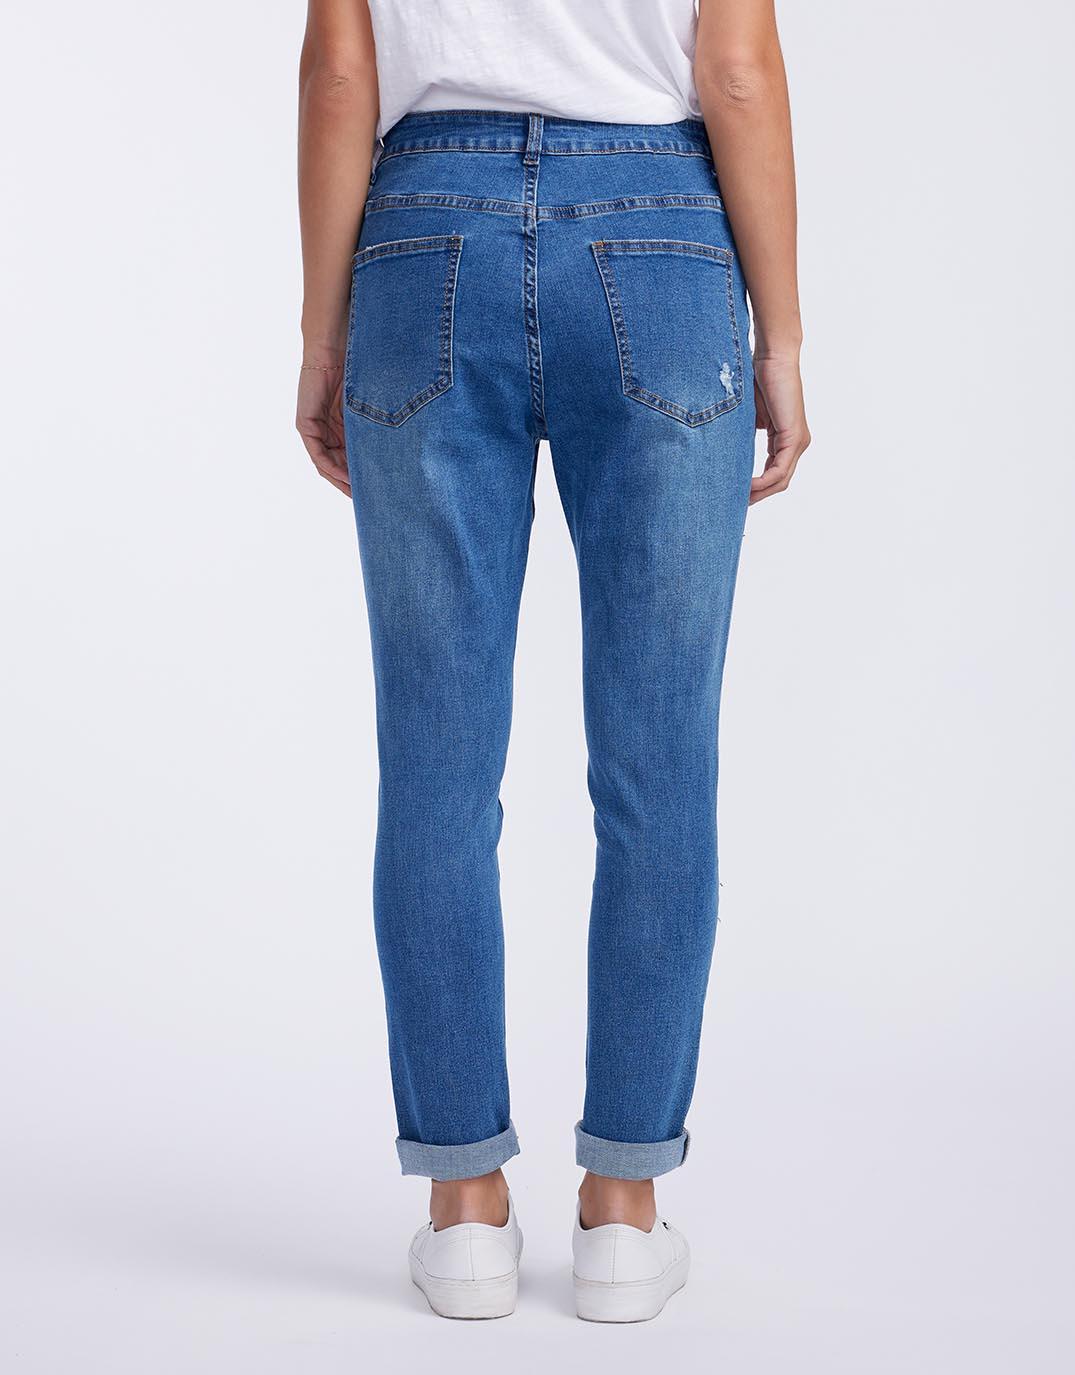 Threadz - Sofia Patch Jeans - Denim - paulaglazebrook Pants